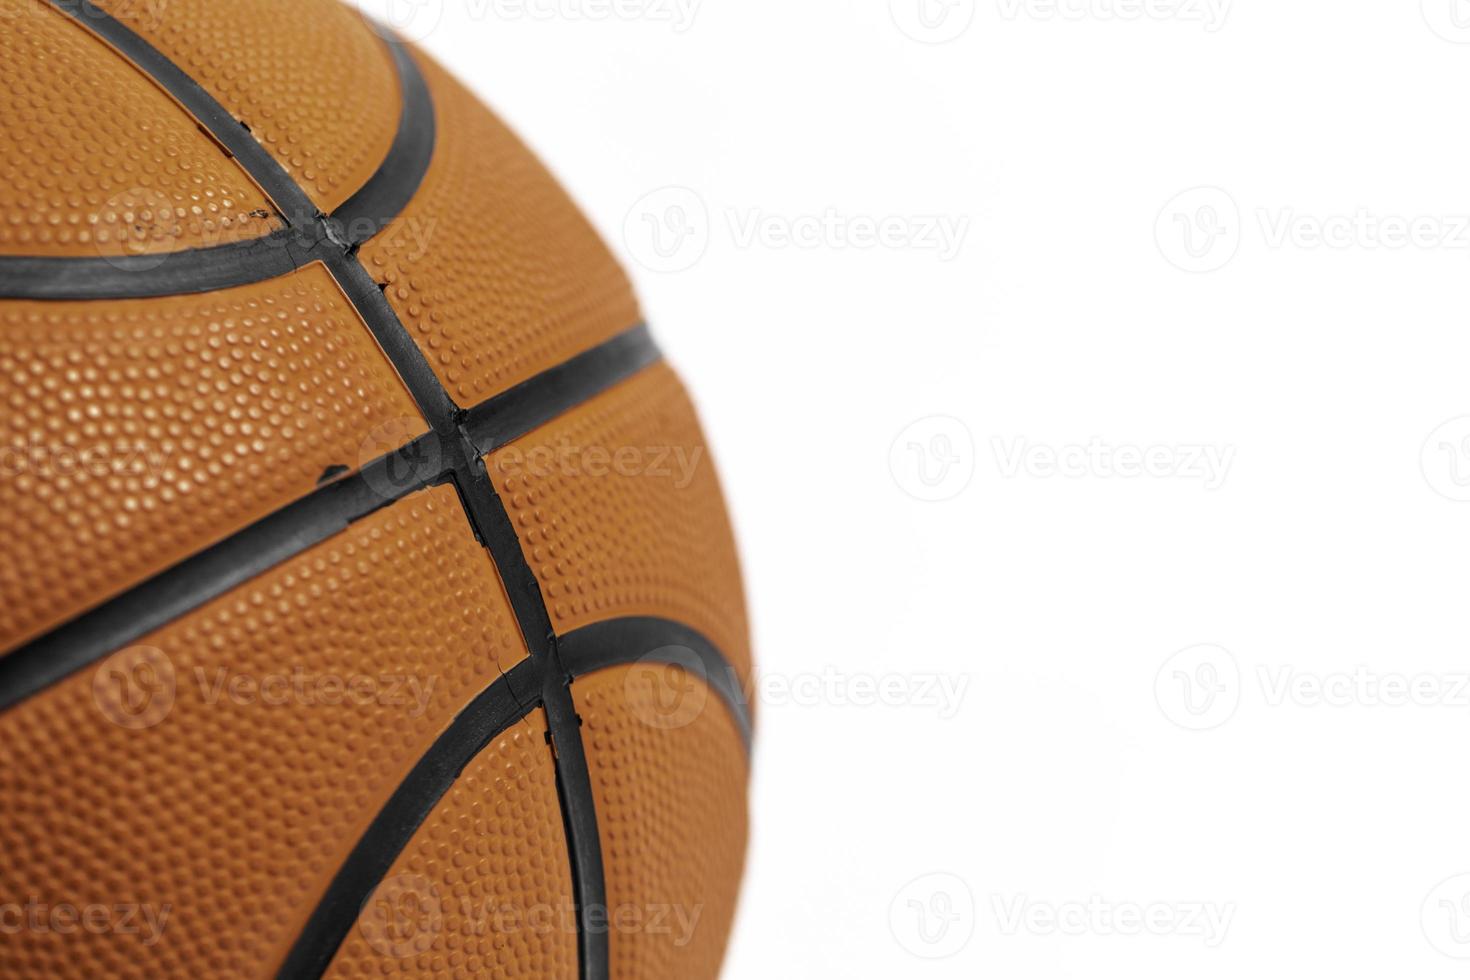 basquete close-up foto